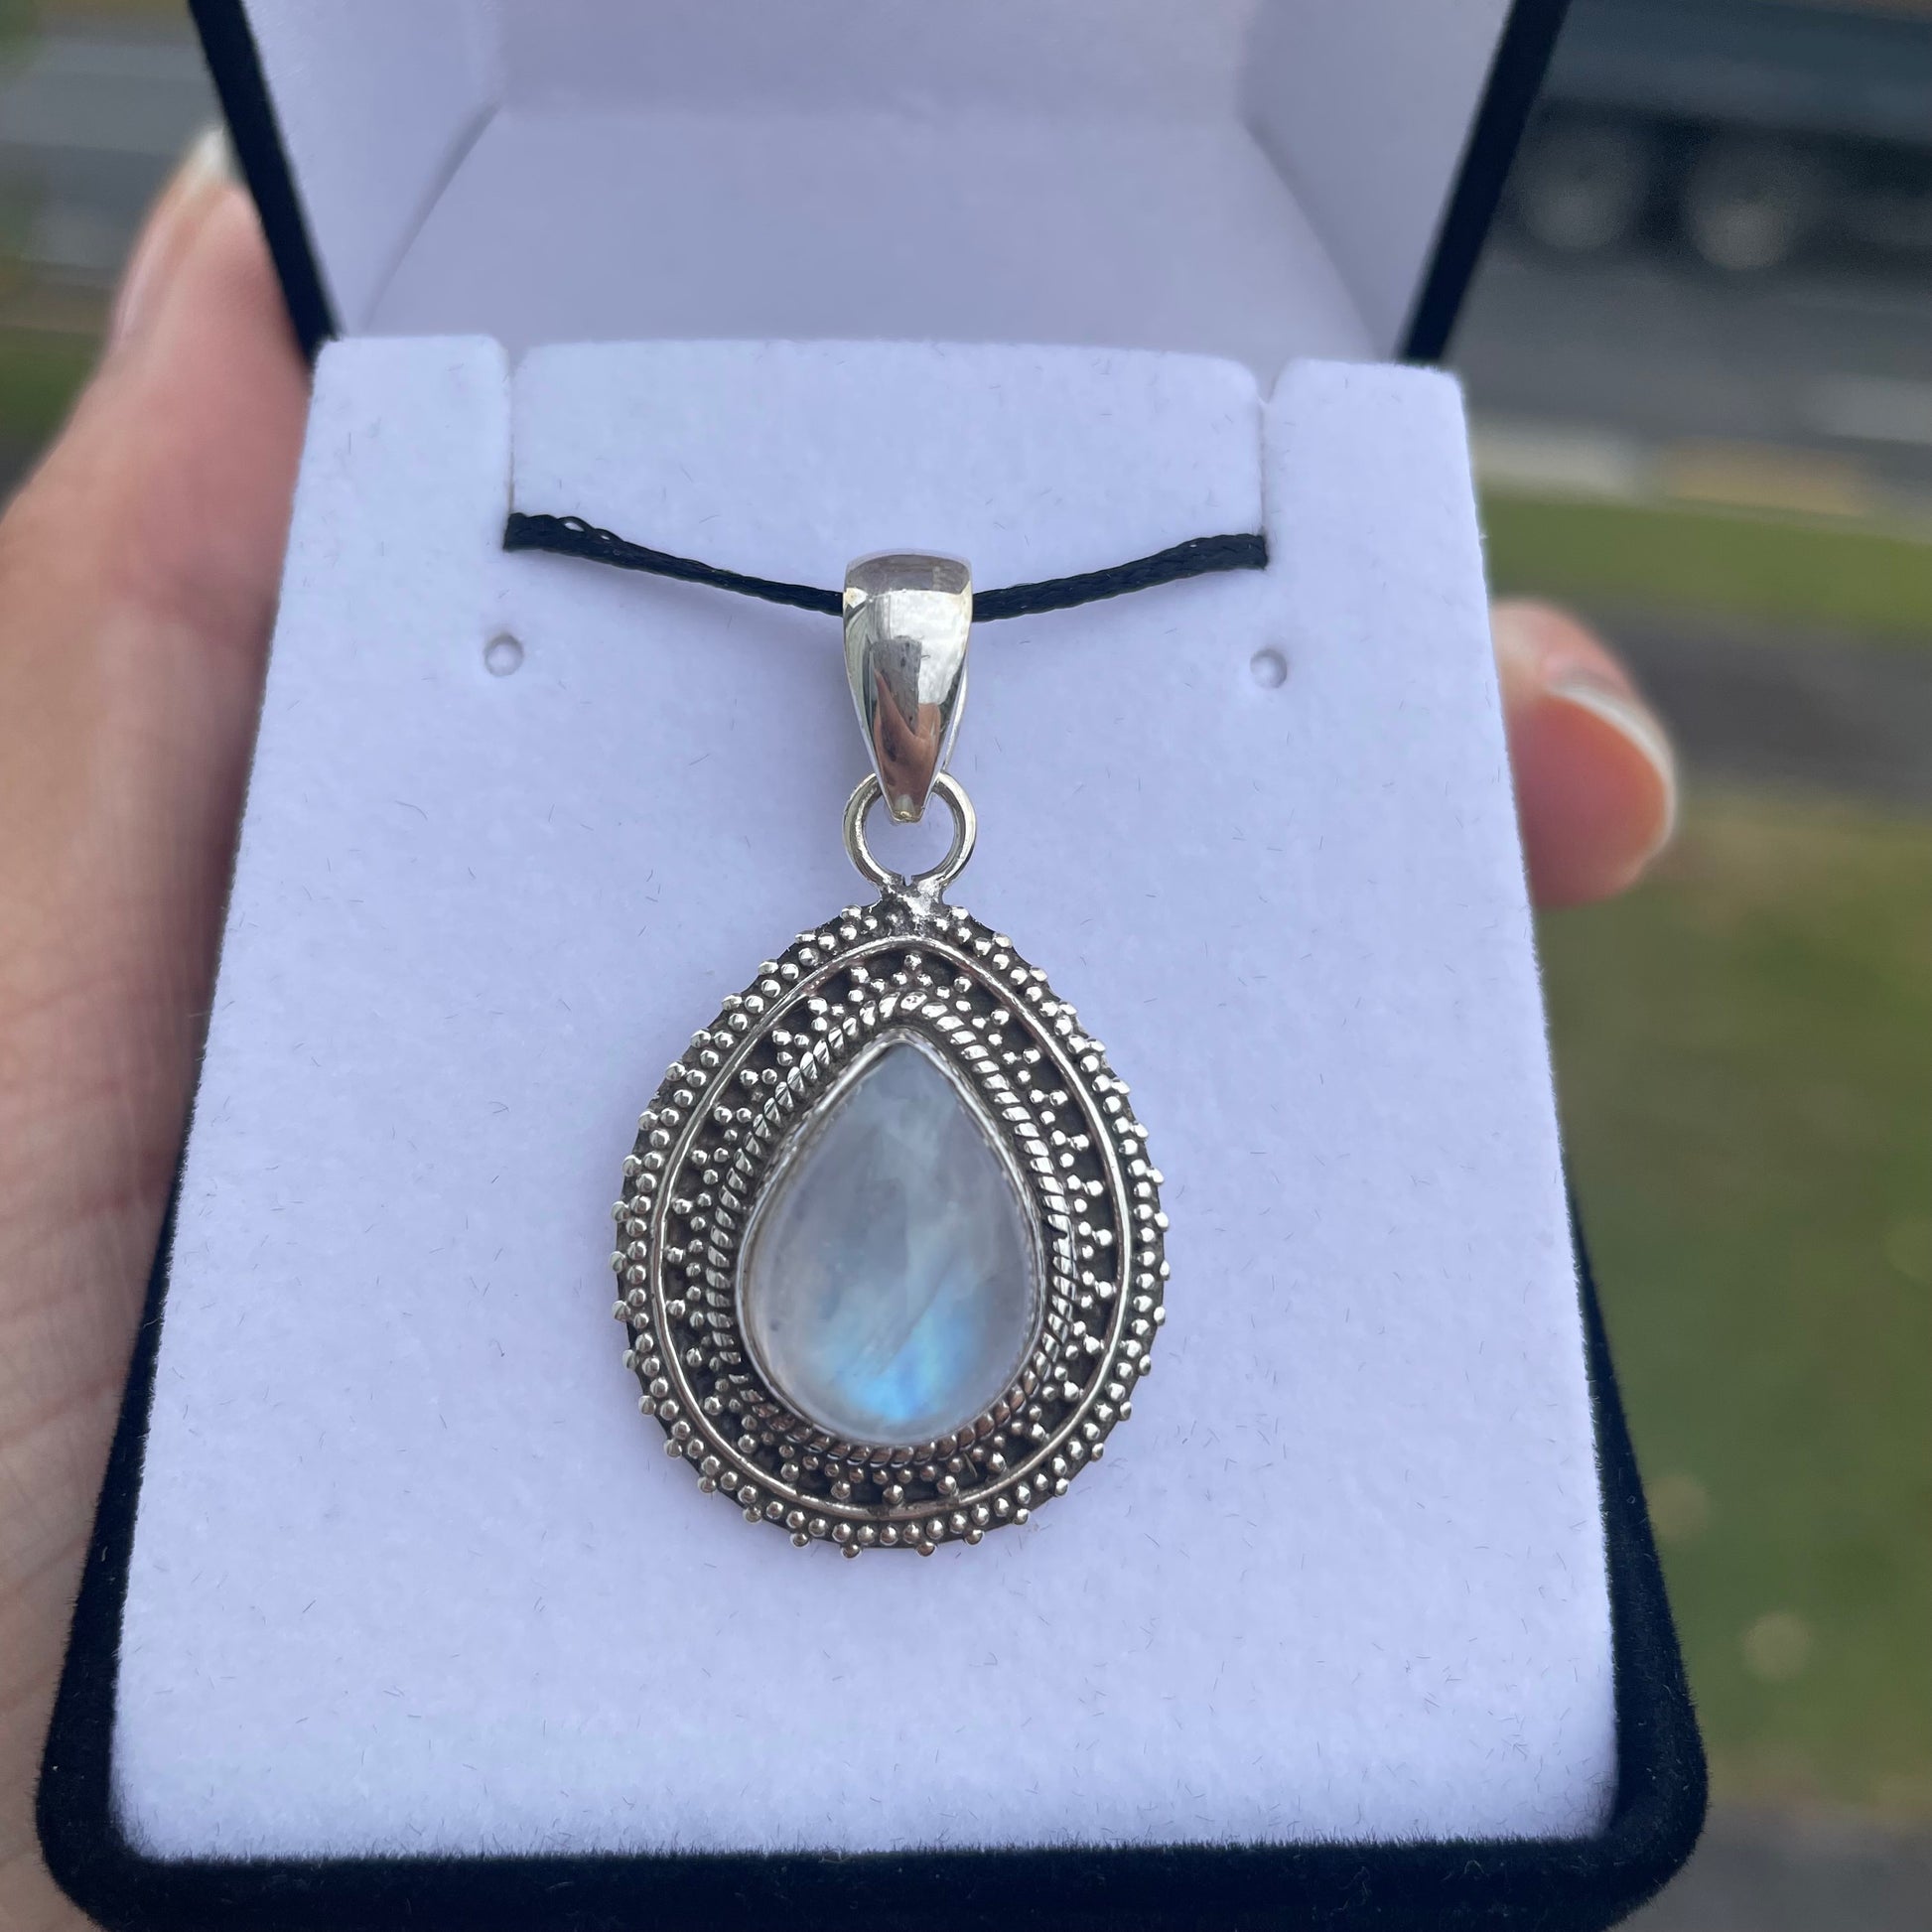 Detailed Teardrop Moonstone Sterling Silver pendant - Rivendell Shop